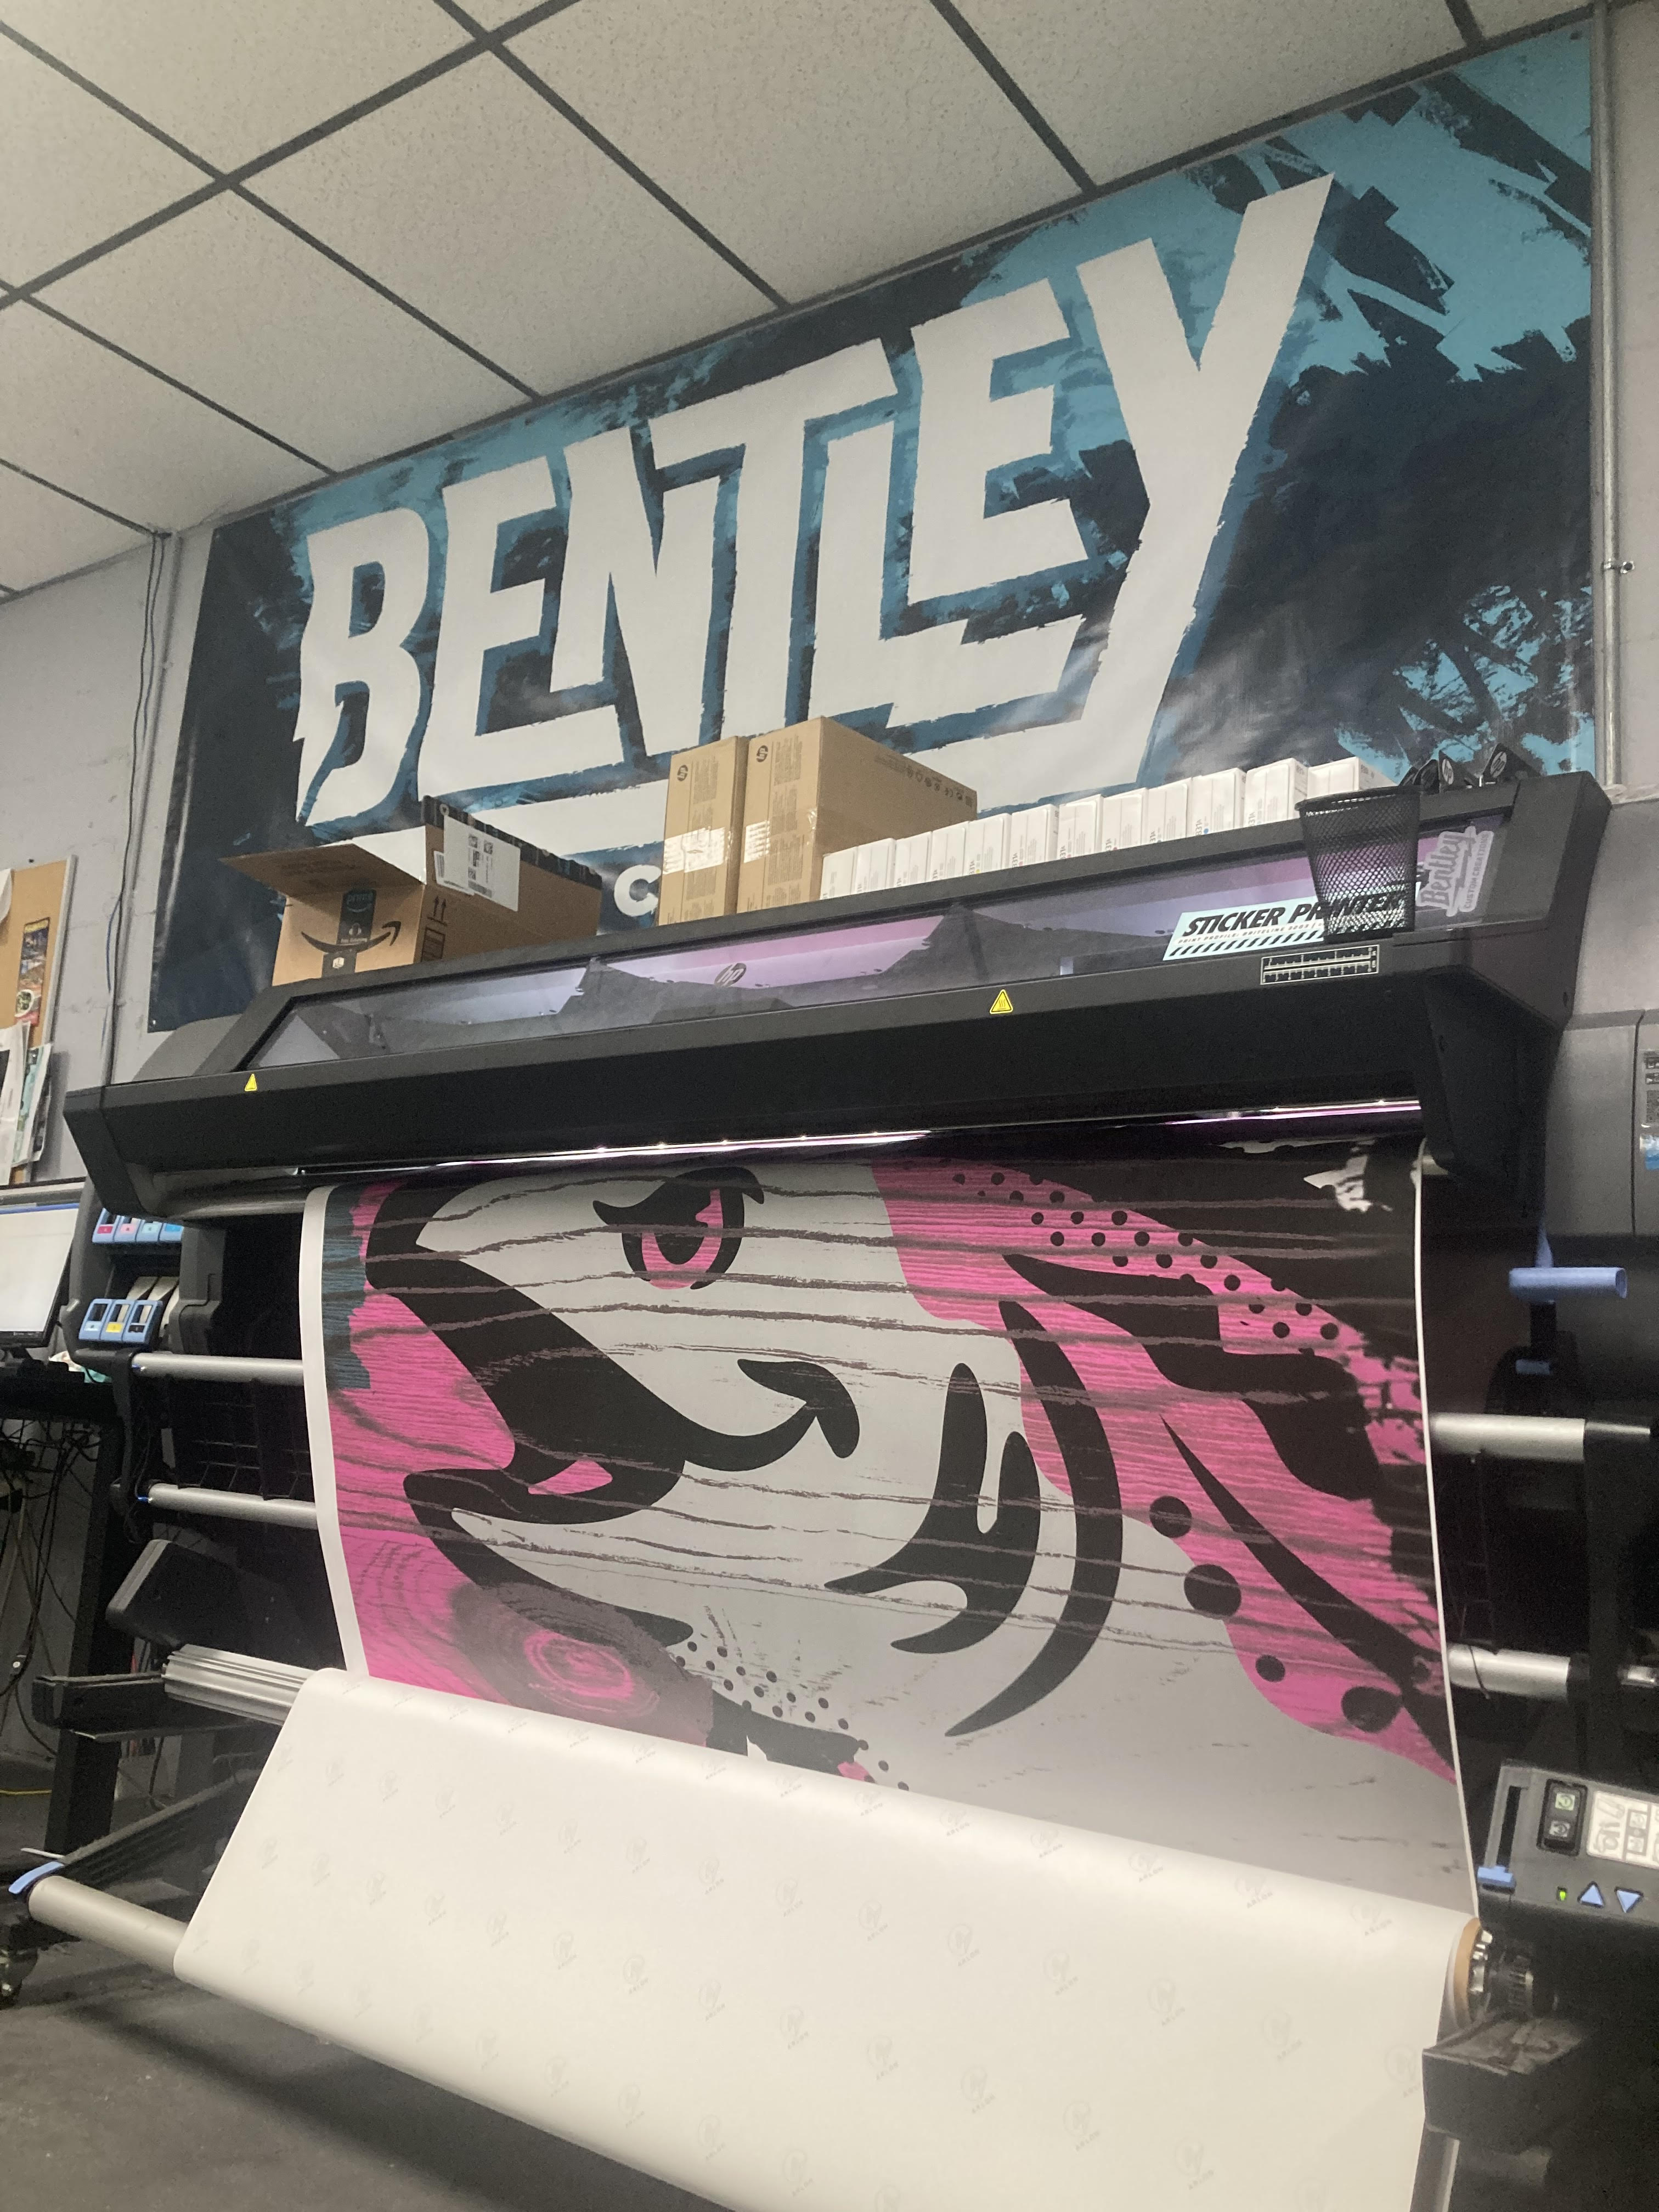 large format printer running a print job on a roll of vinyl